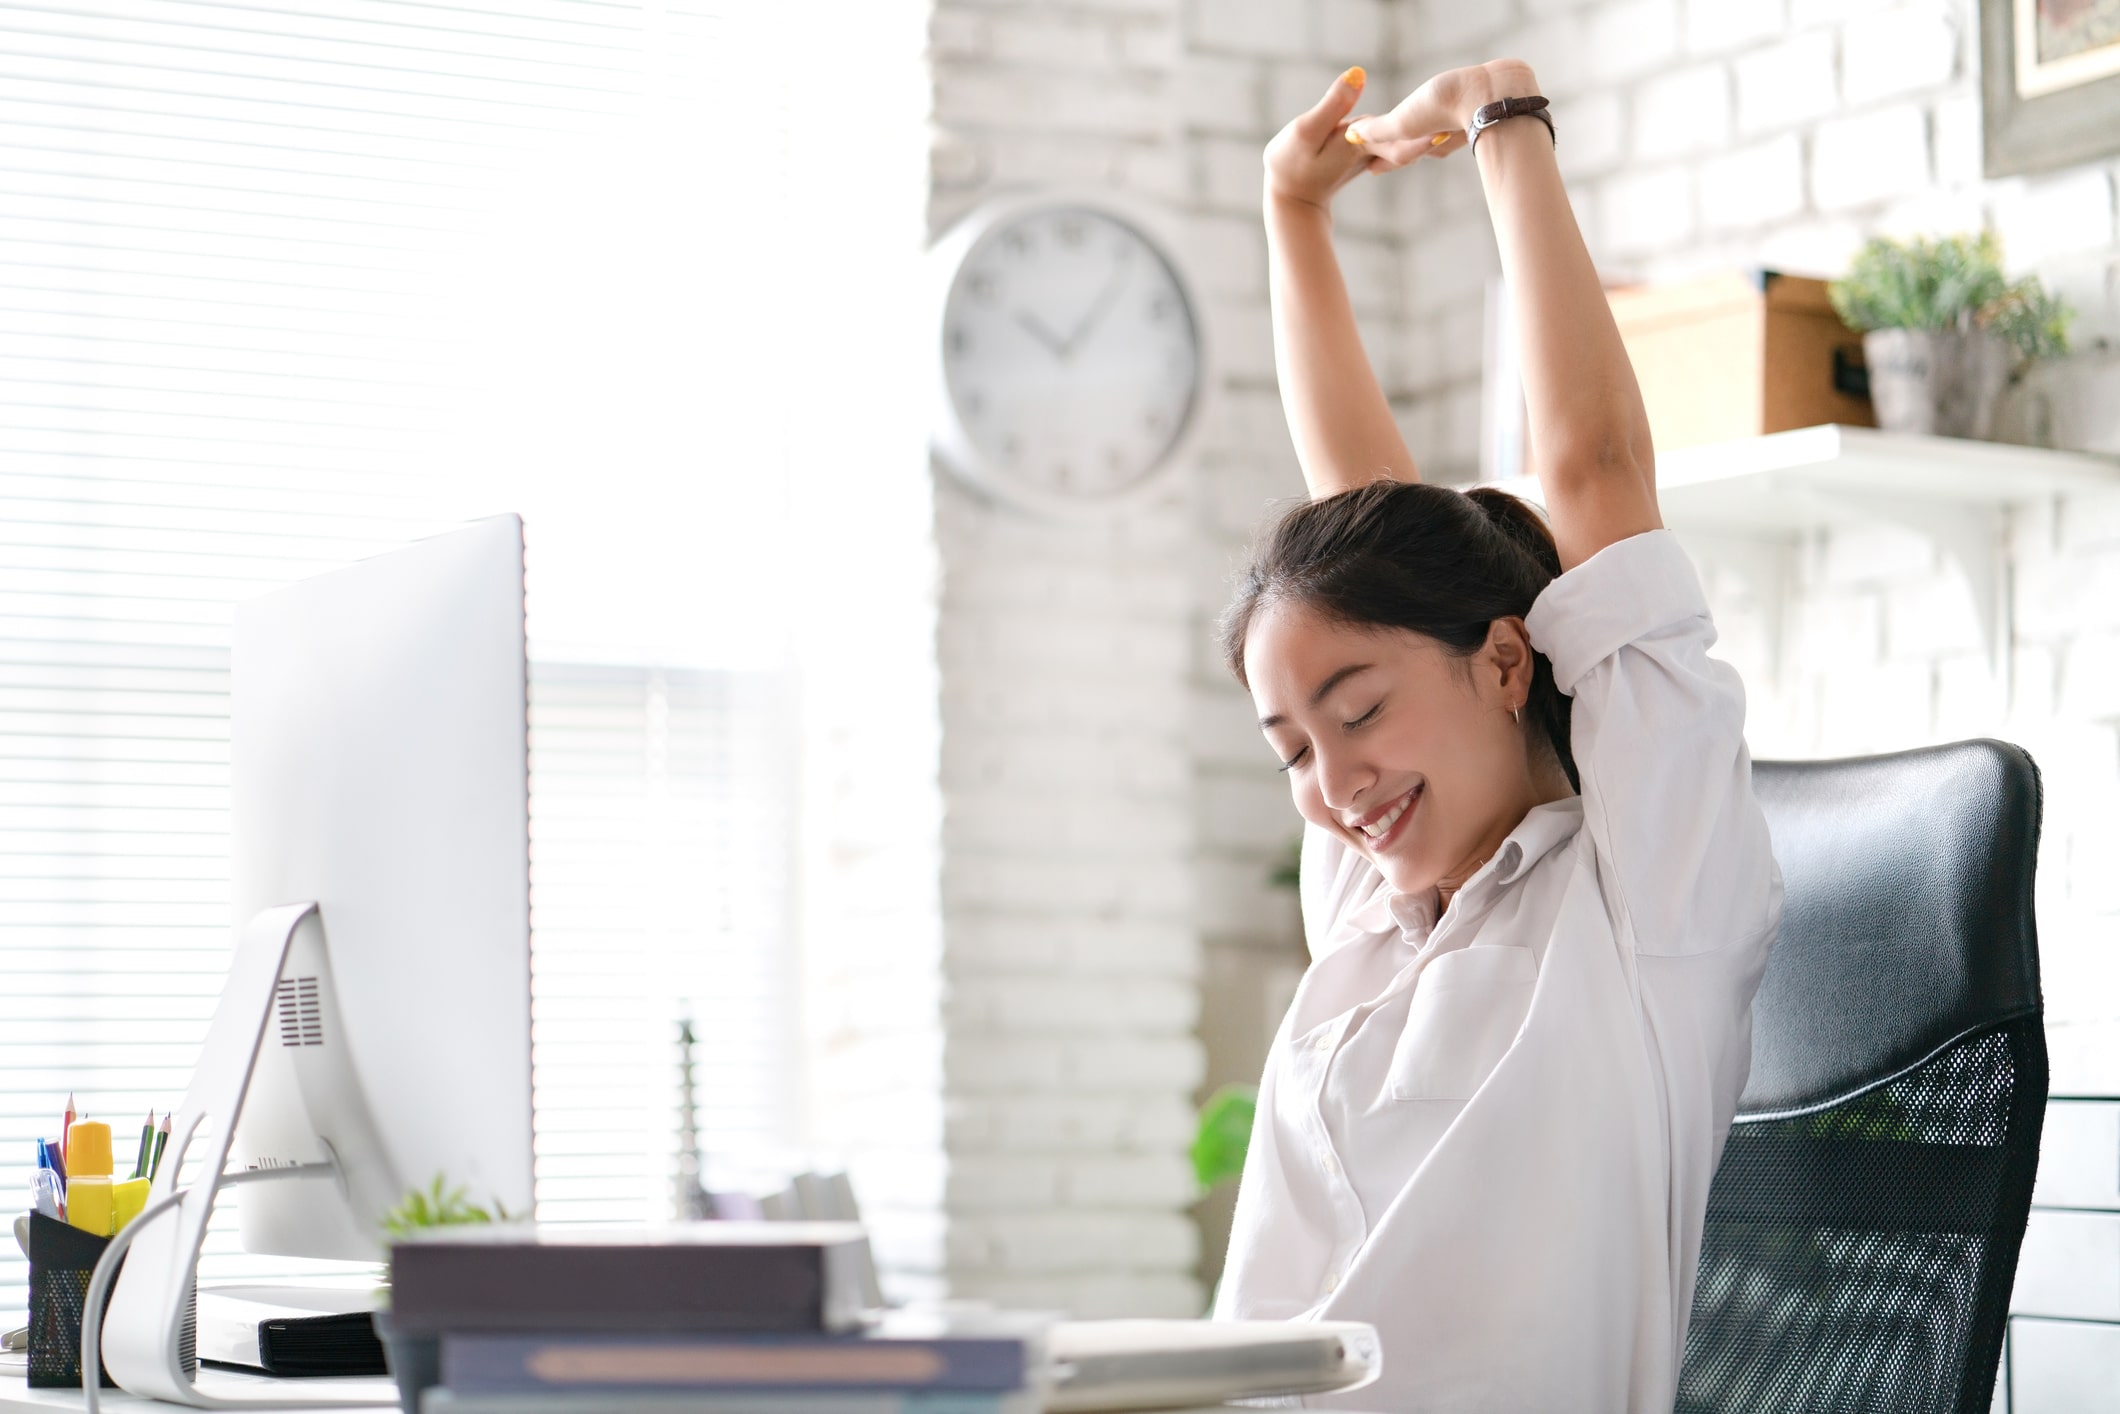 Joyful employee stretching at her desk, practicing workplace gratitude